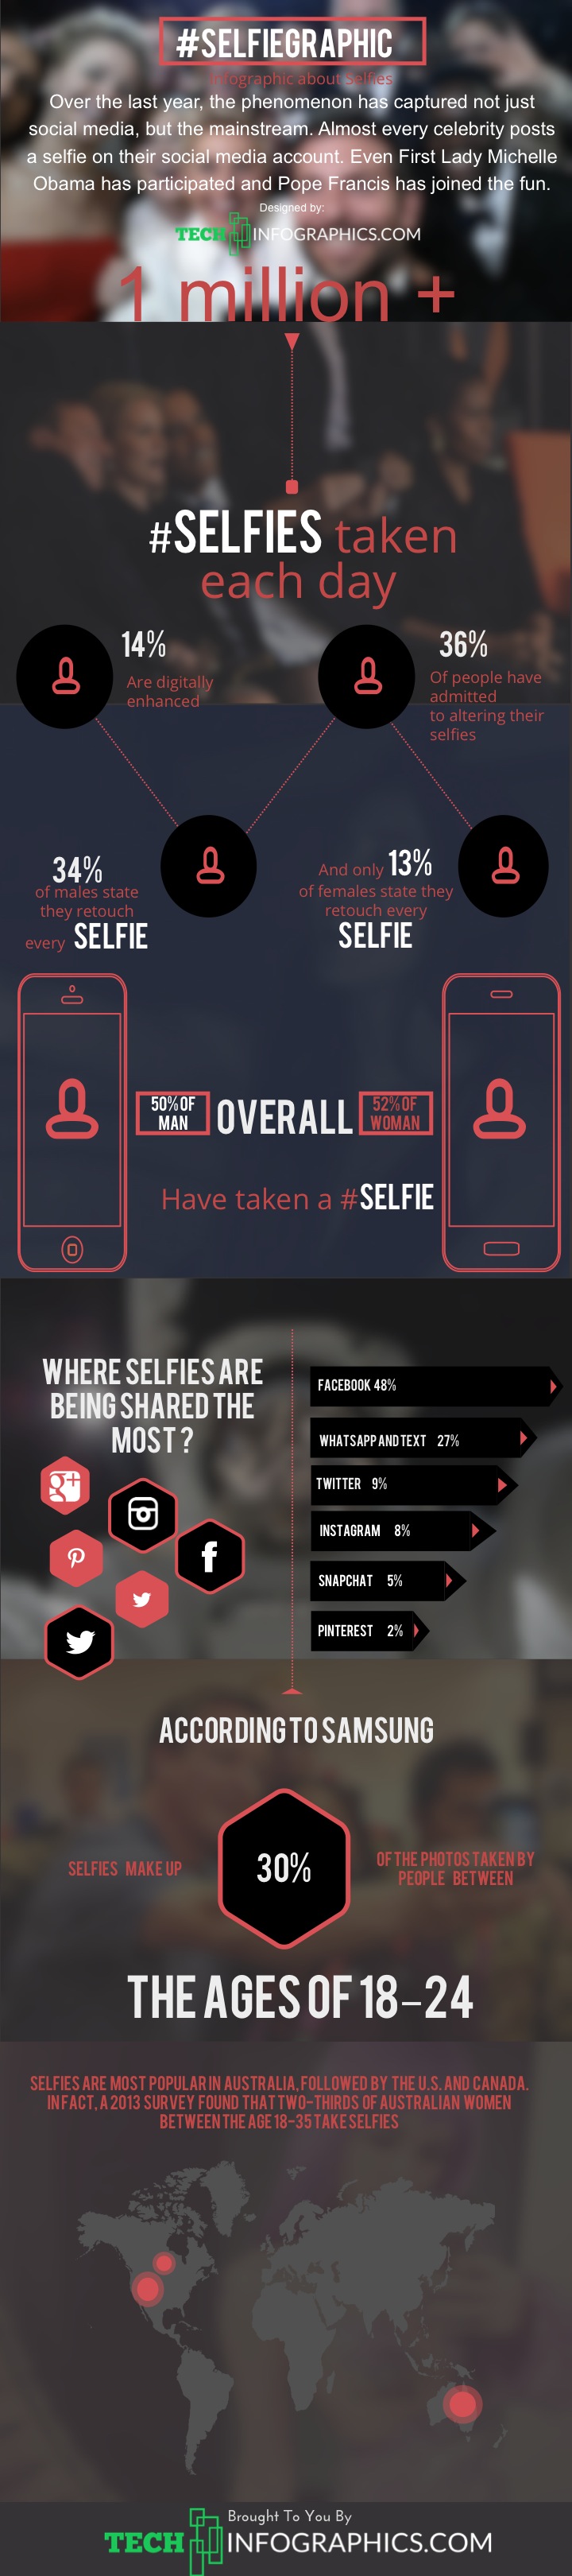 selfies-infographic